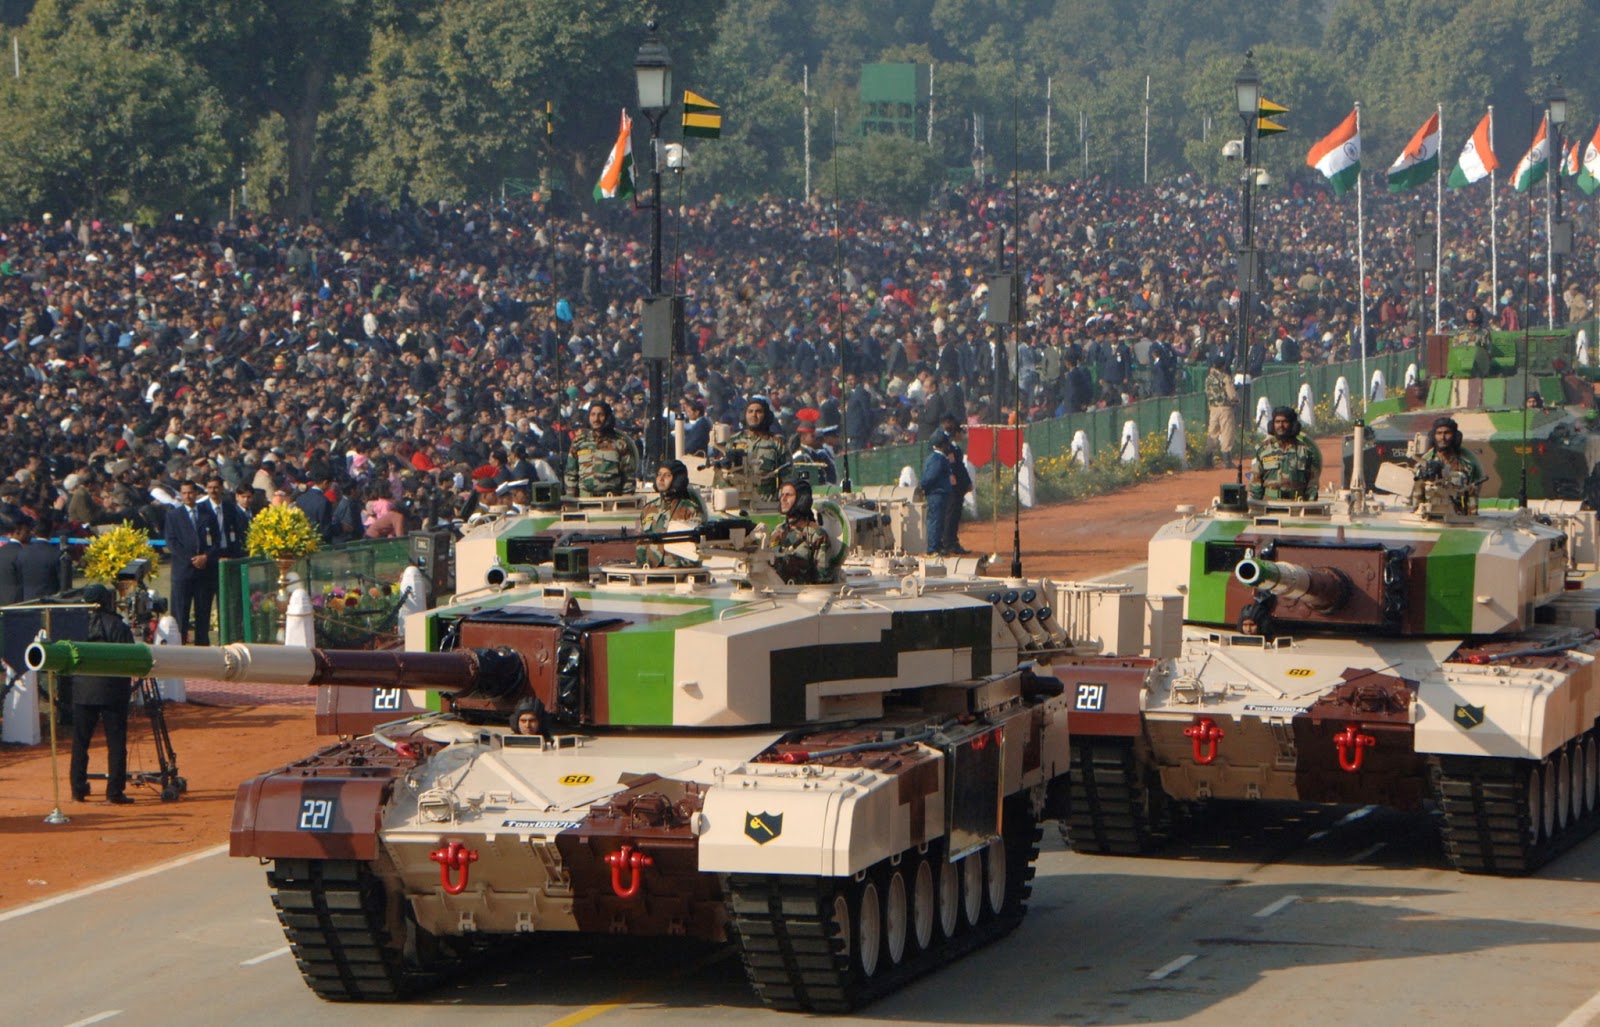 http://3.bp.blogspot.com/-caimA47ZKgk/UQenqk4ADfI/AAAAAAAAsCM/fWFFigweqtc/s1600/Arjun-Main-Battle-Tank-MBT-Indian-Army-IA.jpg